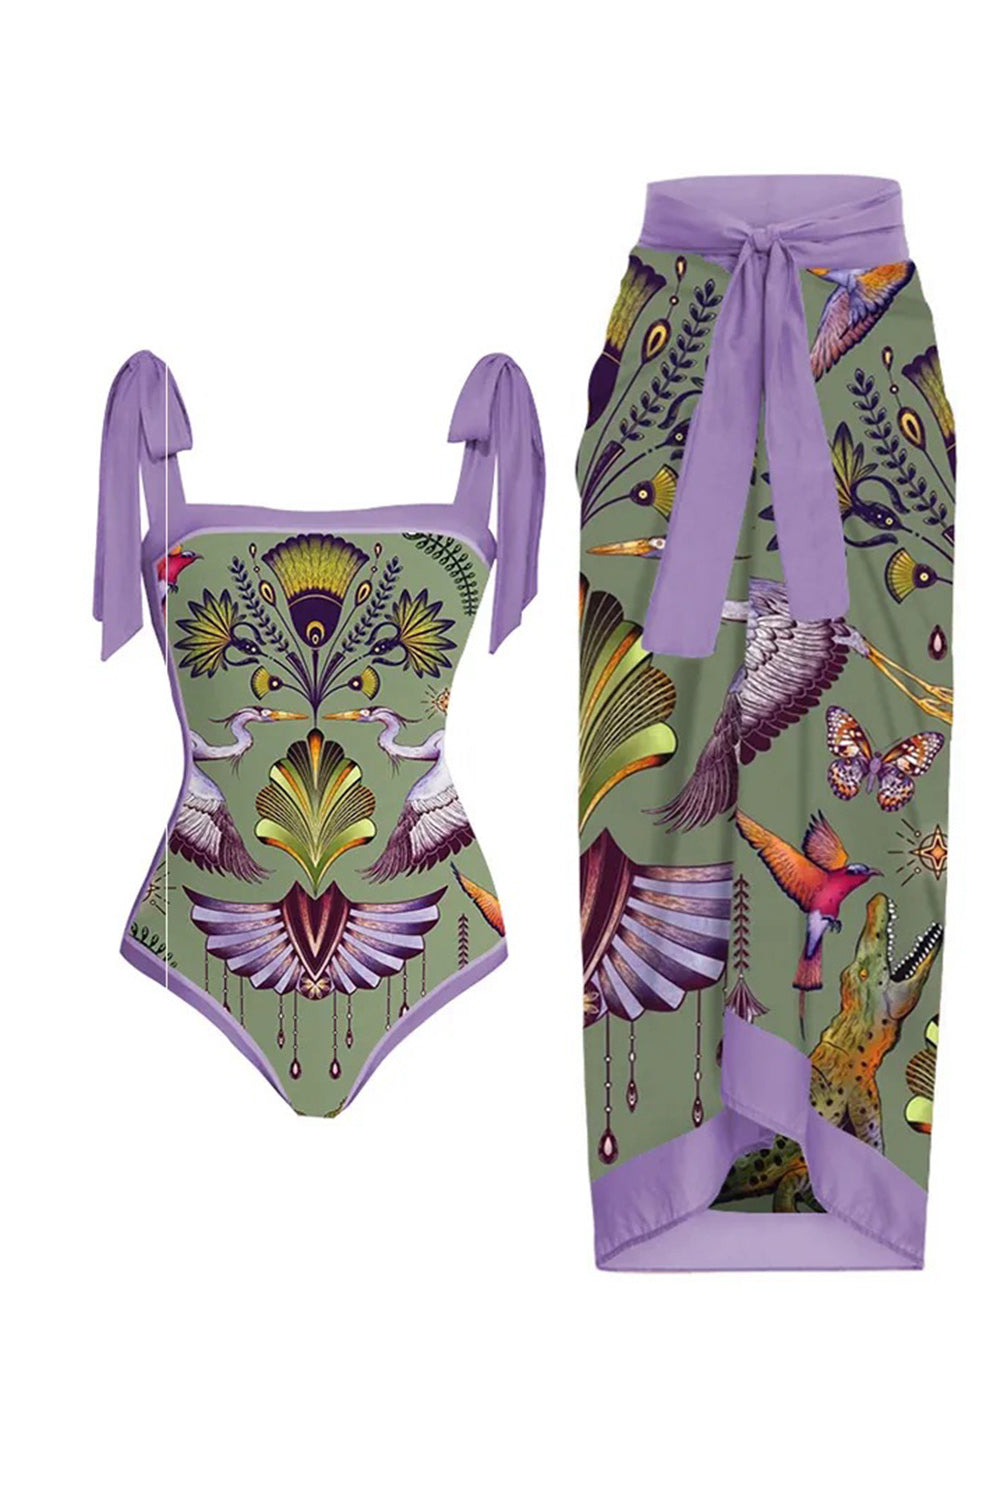 Purple Beach Skirt Printed Boho One-Piece Cover Ups Swimsuits